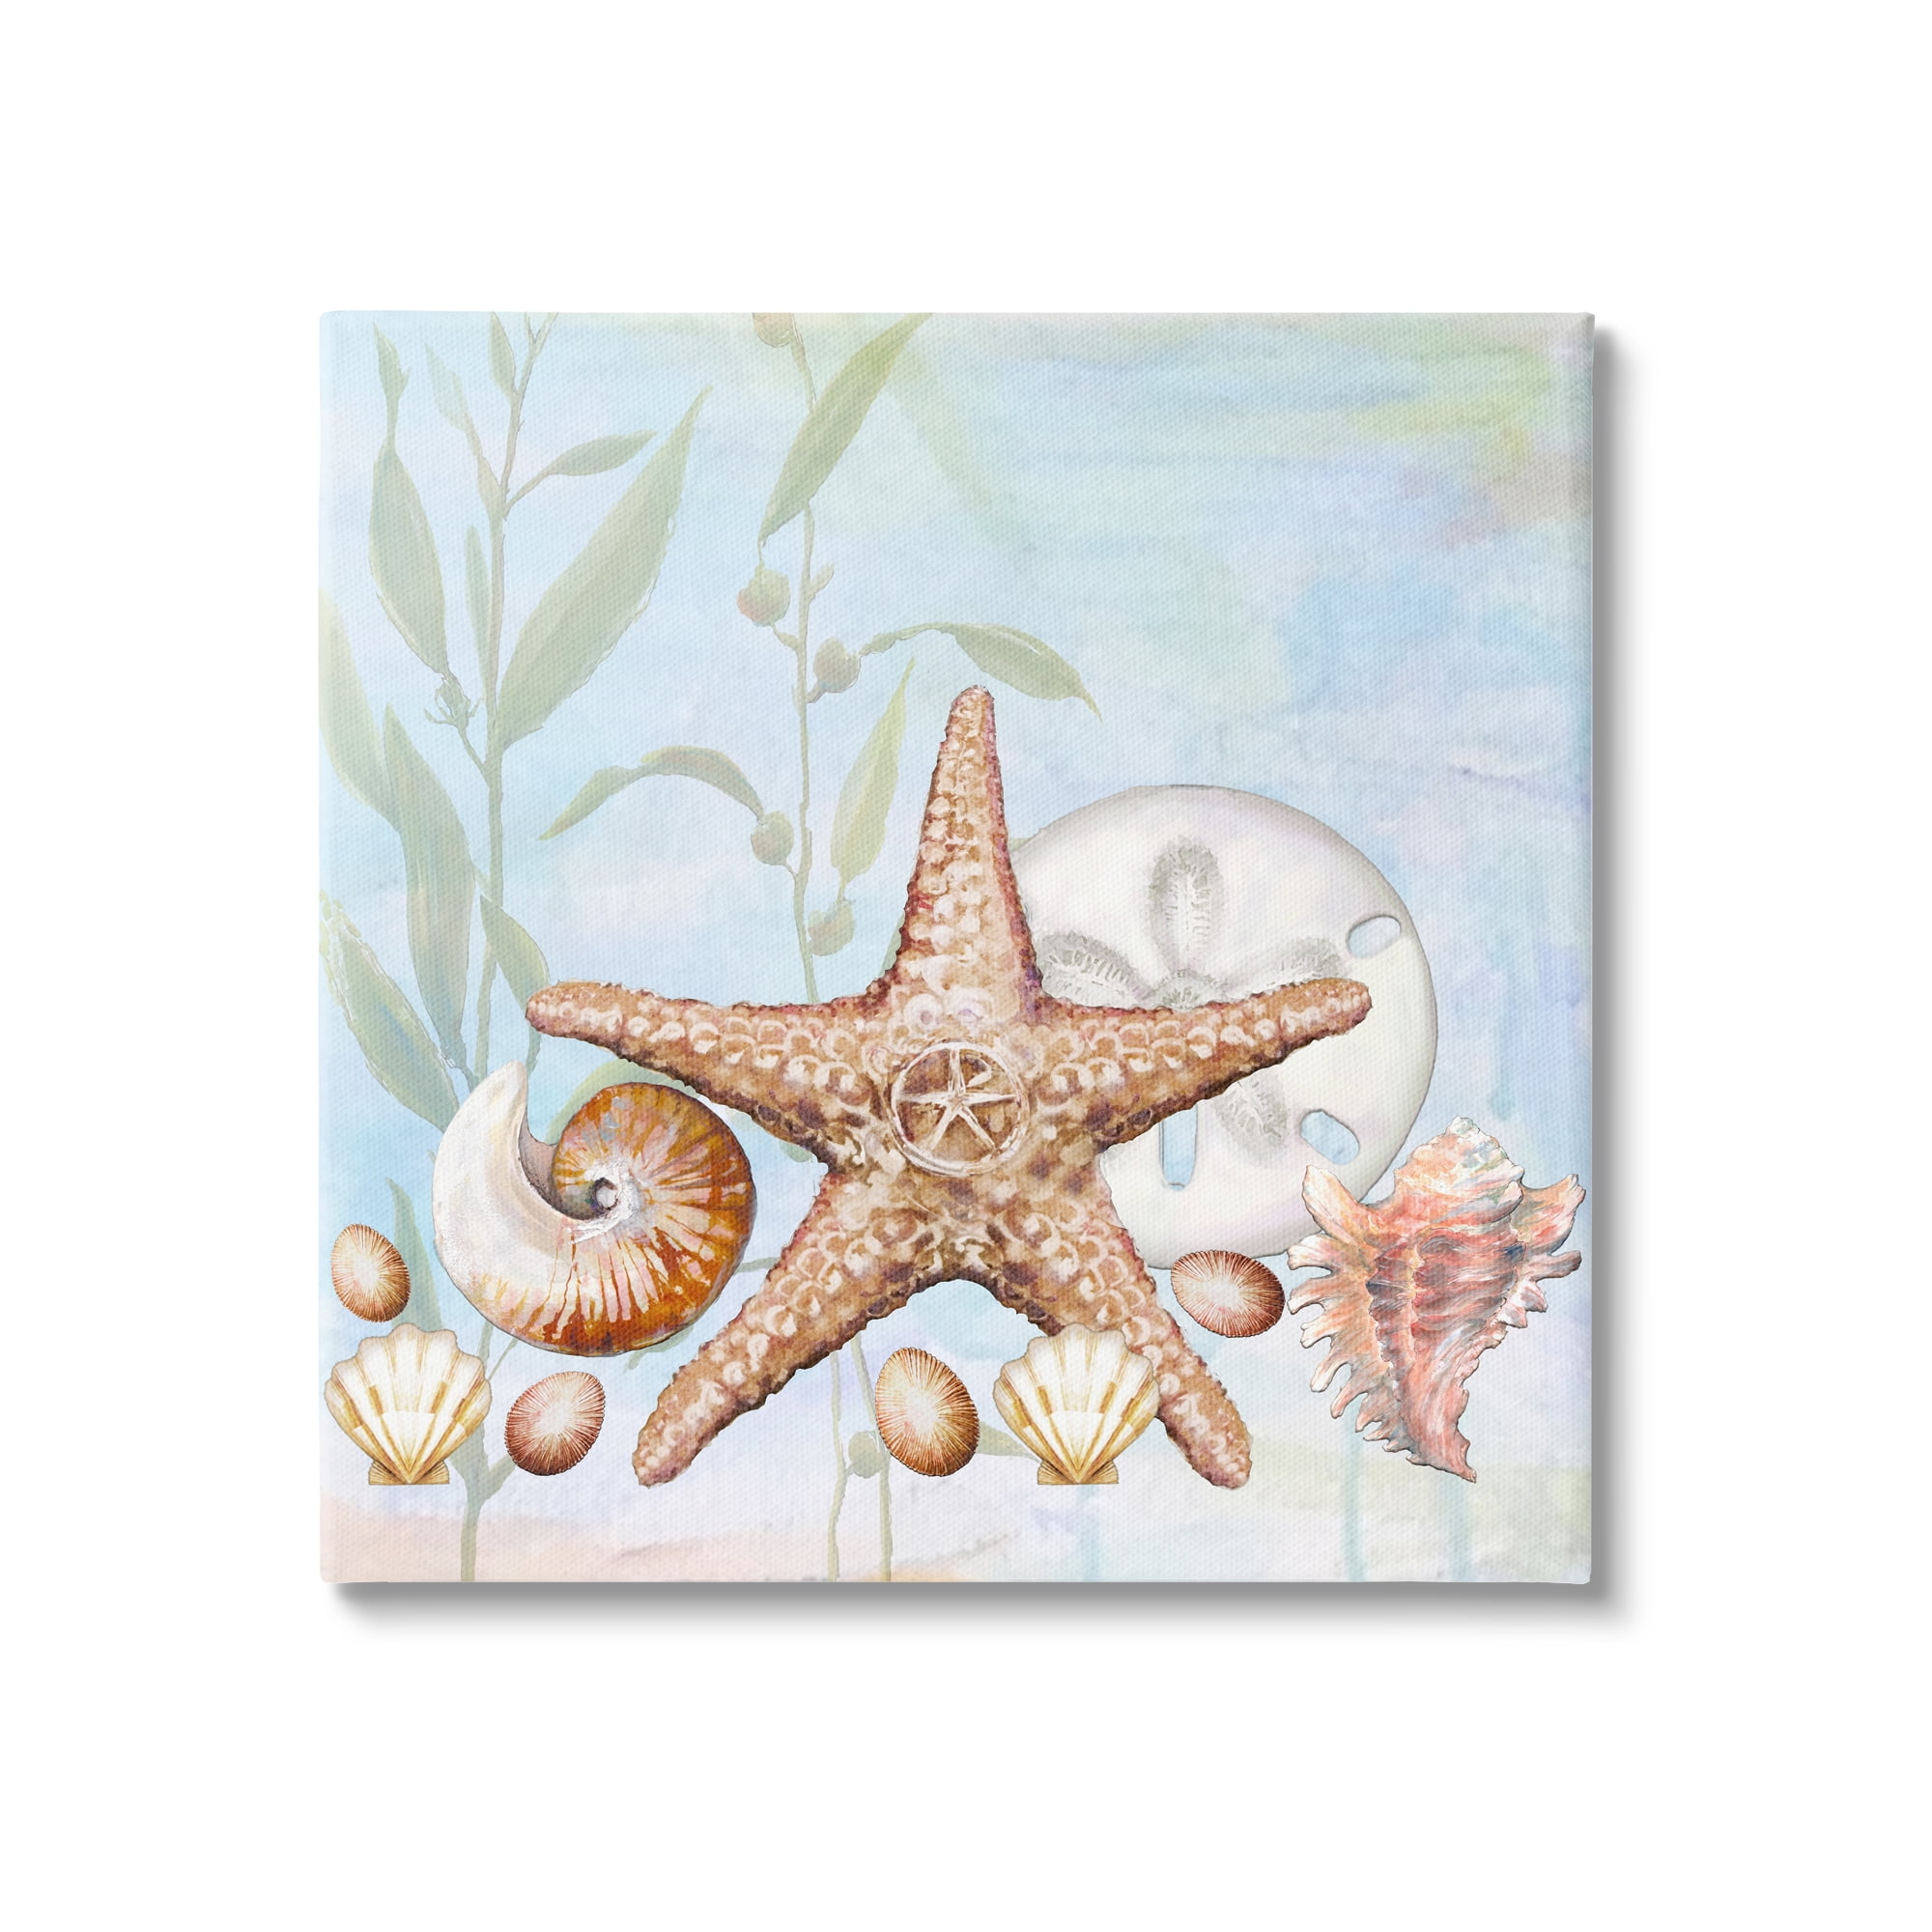 Seashells by MillhillA Starfish / Sea Star Collection